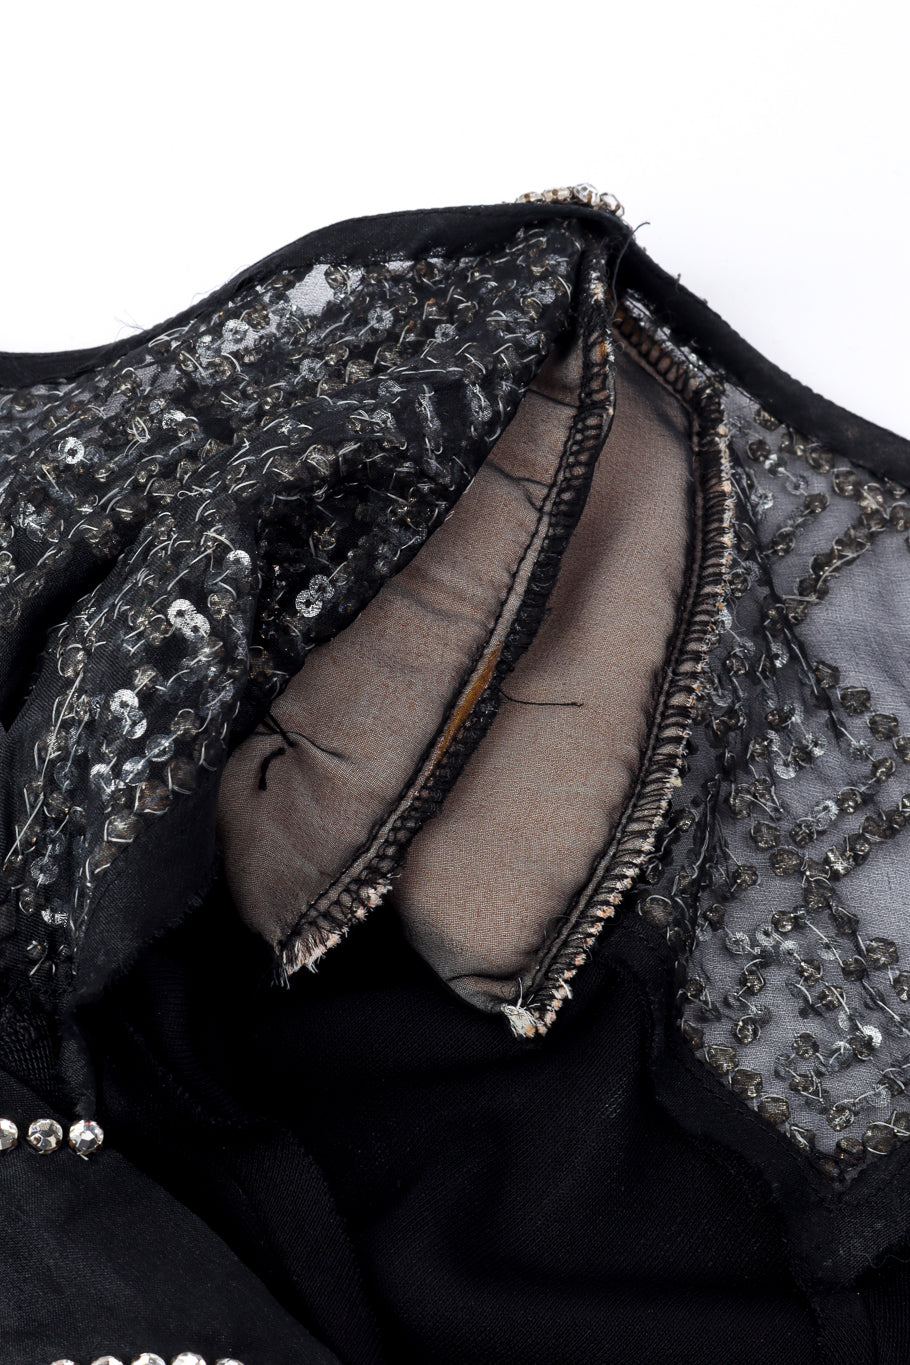 Beaded Blouson Dolman Dress by Victoria Royal shoulder pad @recessla